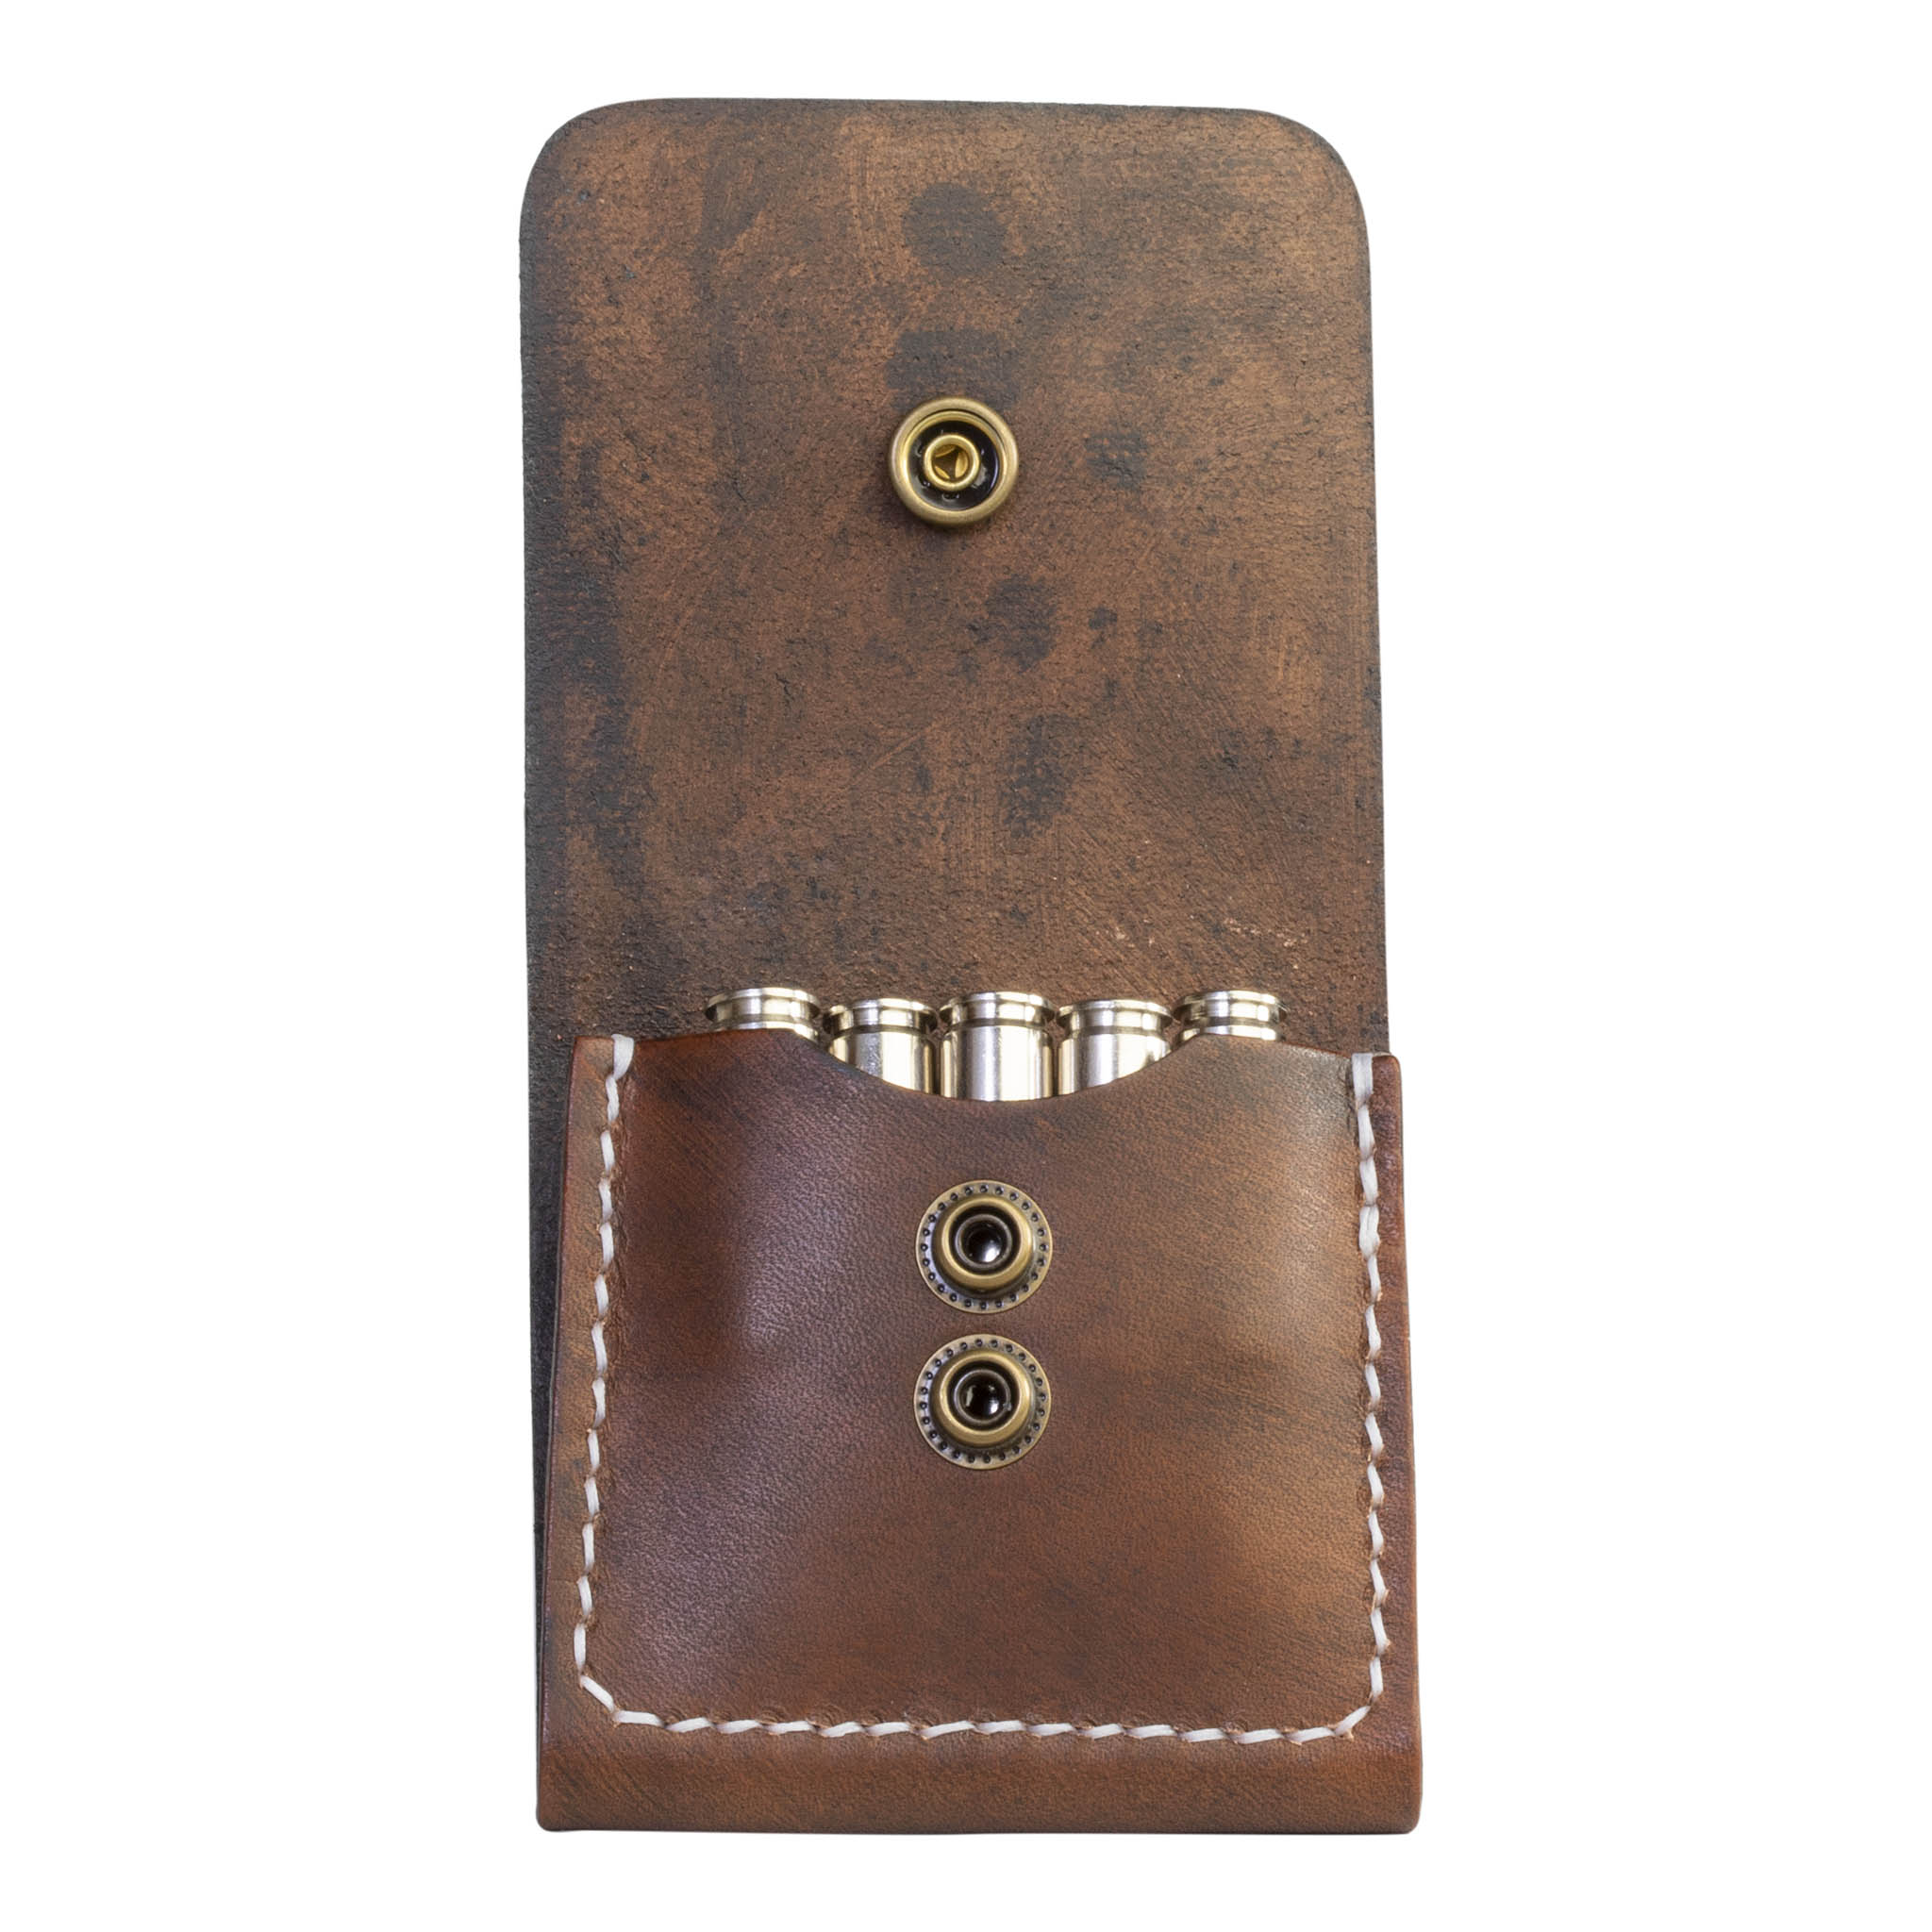 FORLOH Leather Cartridge Wallet - FORLOH